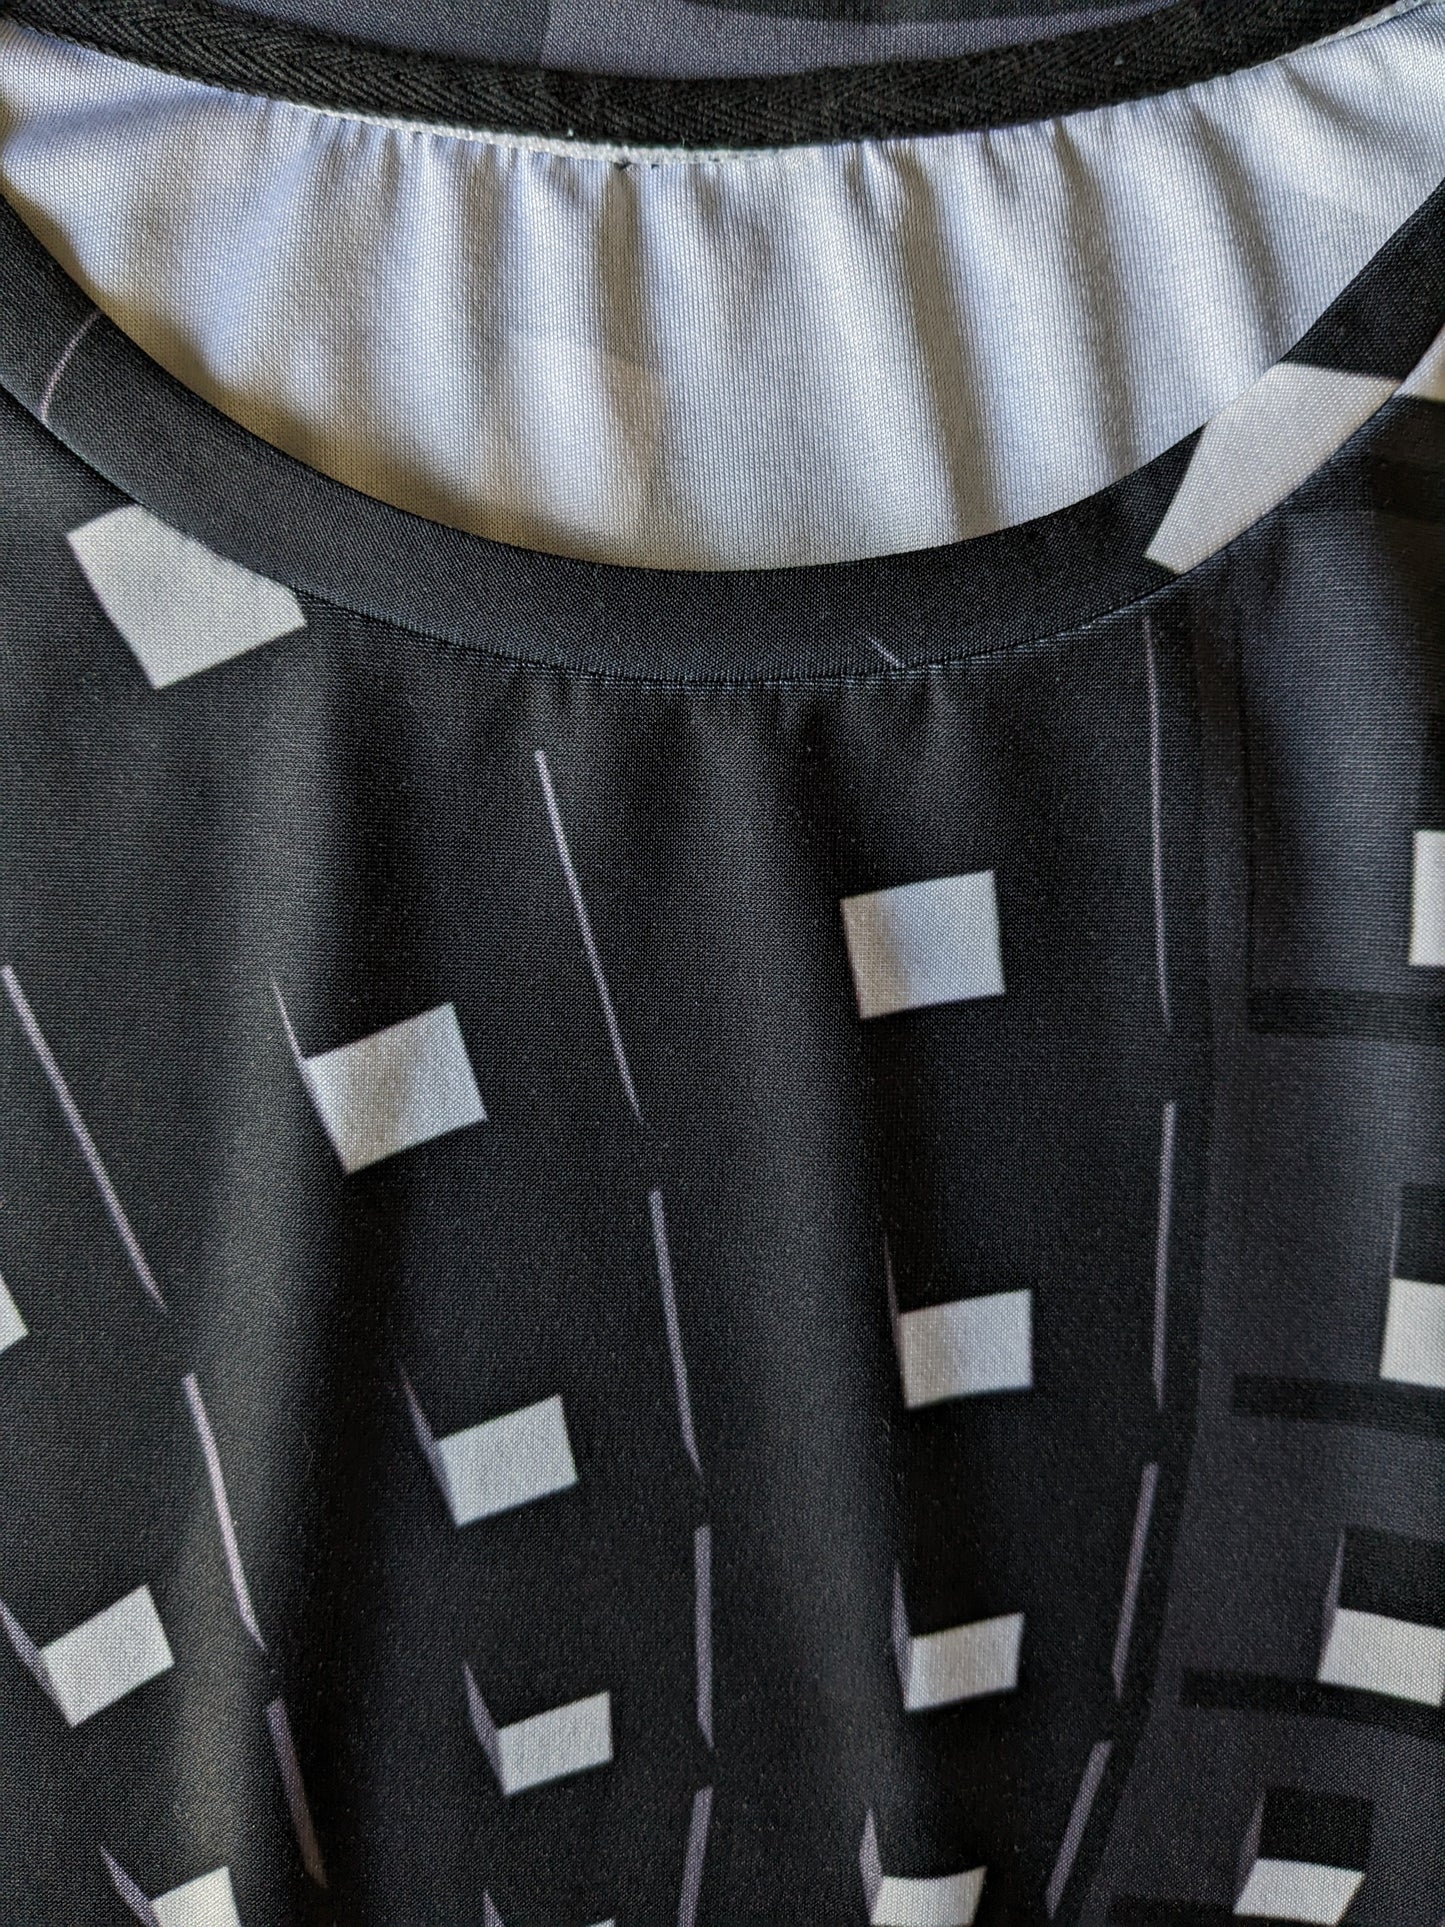 Geometric Print shirt. Black gray white colored. Size M. Stretch.